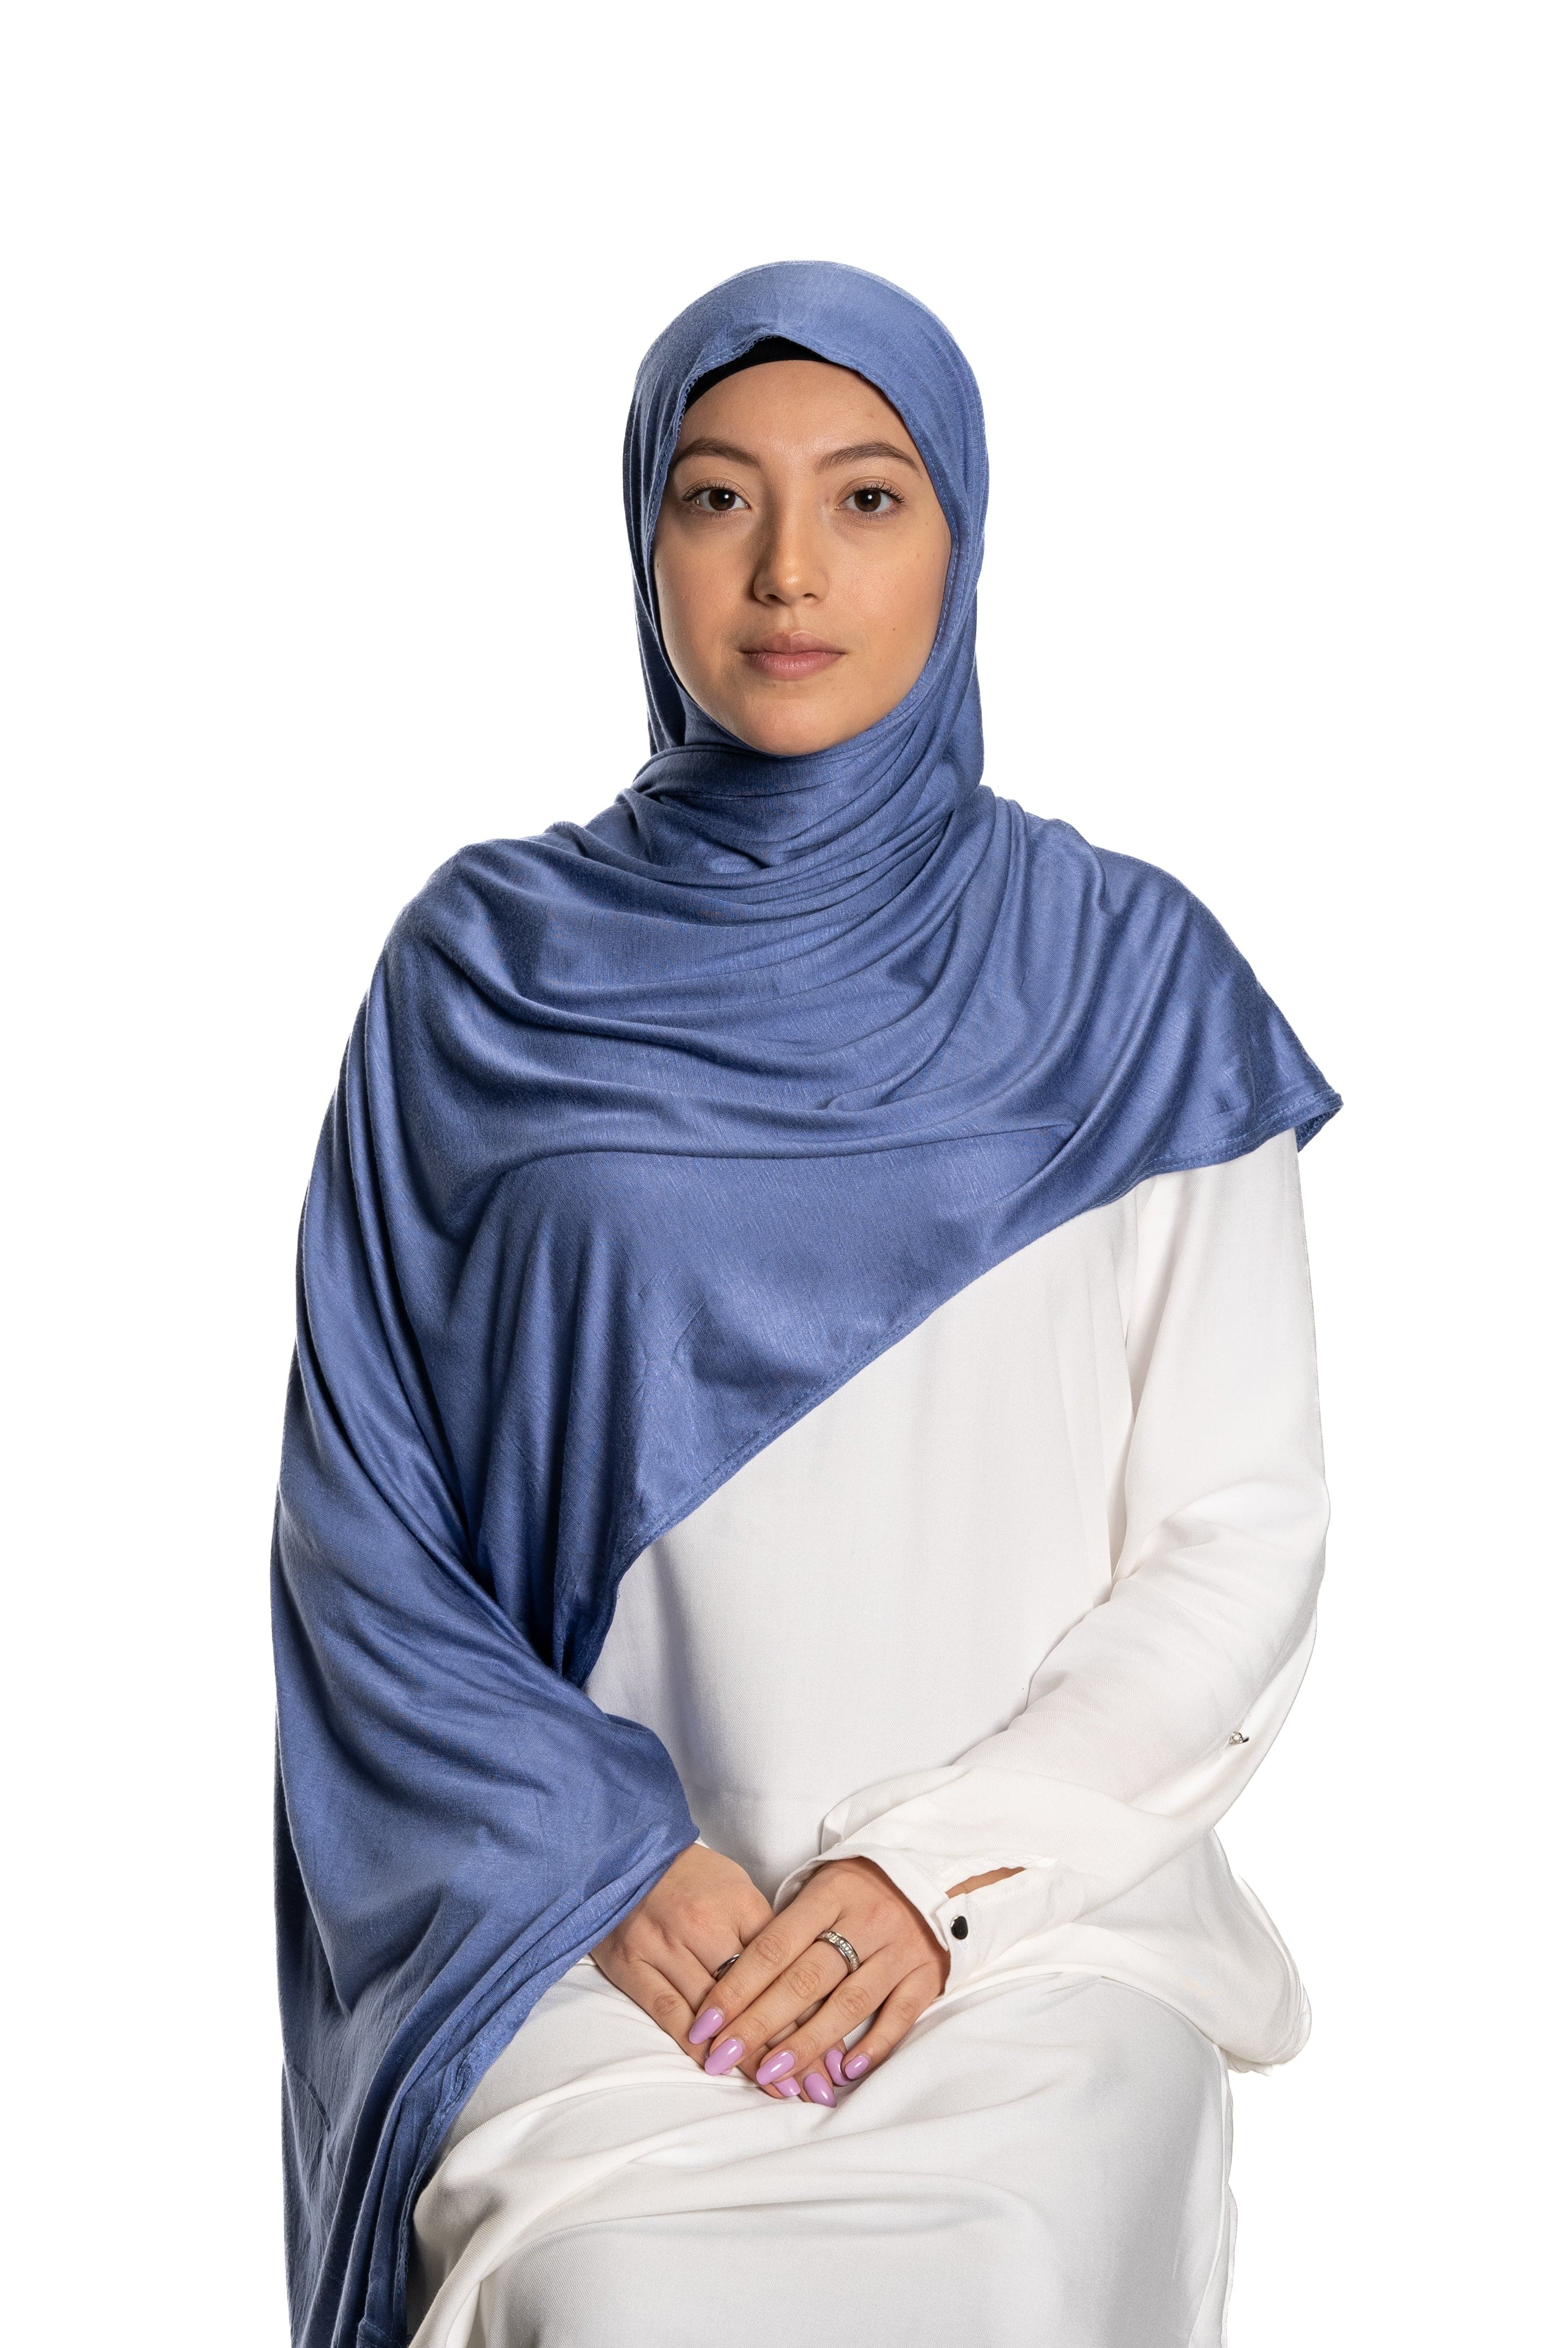 Jolie Nisa Hijab Brink Blue Premium Slip-on Jersey Instant Head Scarf Wrap for Effortless and Stylish Hijab Wear Premium Slip-on instant Jersey Head Scarf Wrap for Effortless and Stylish Hijab Wear!